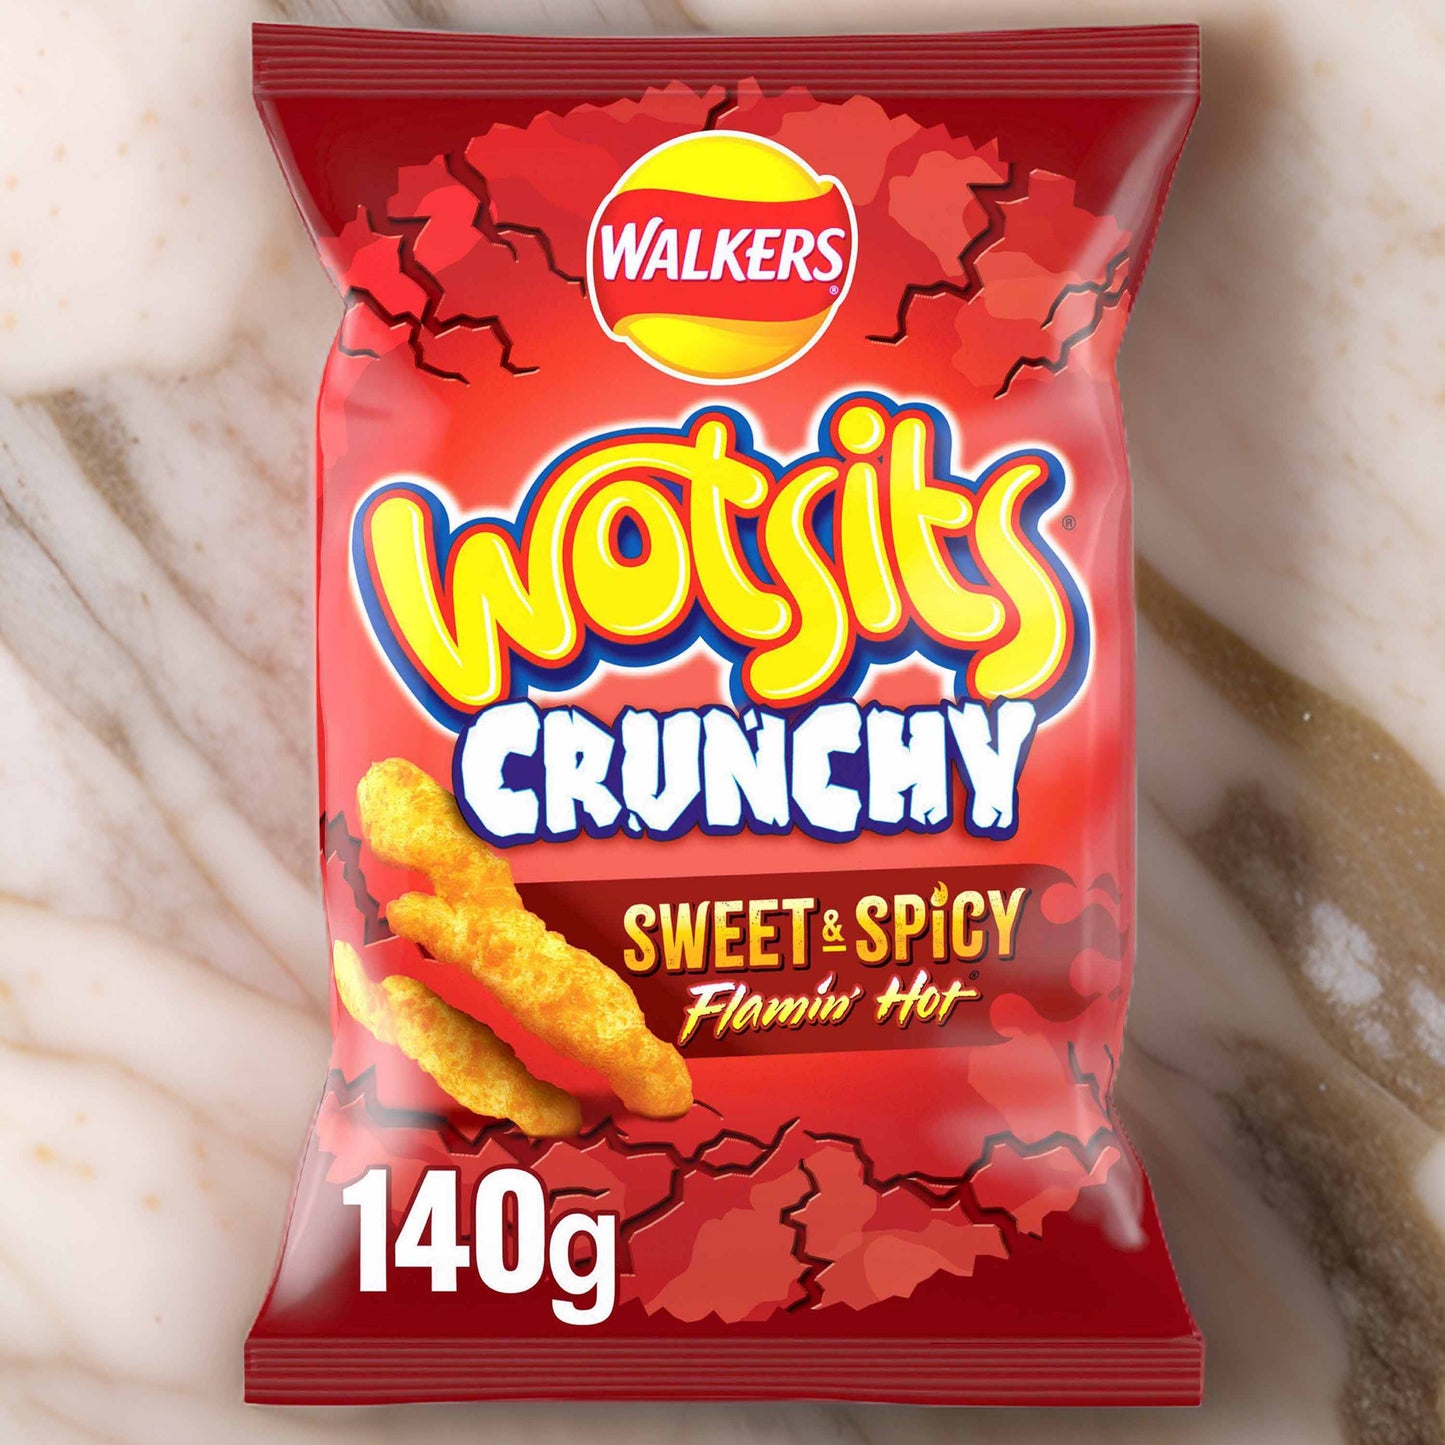 Walkers Wotsits Crunchy Flamin' Hot Crisps - 140g (Sharing Bag) - British crisps